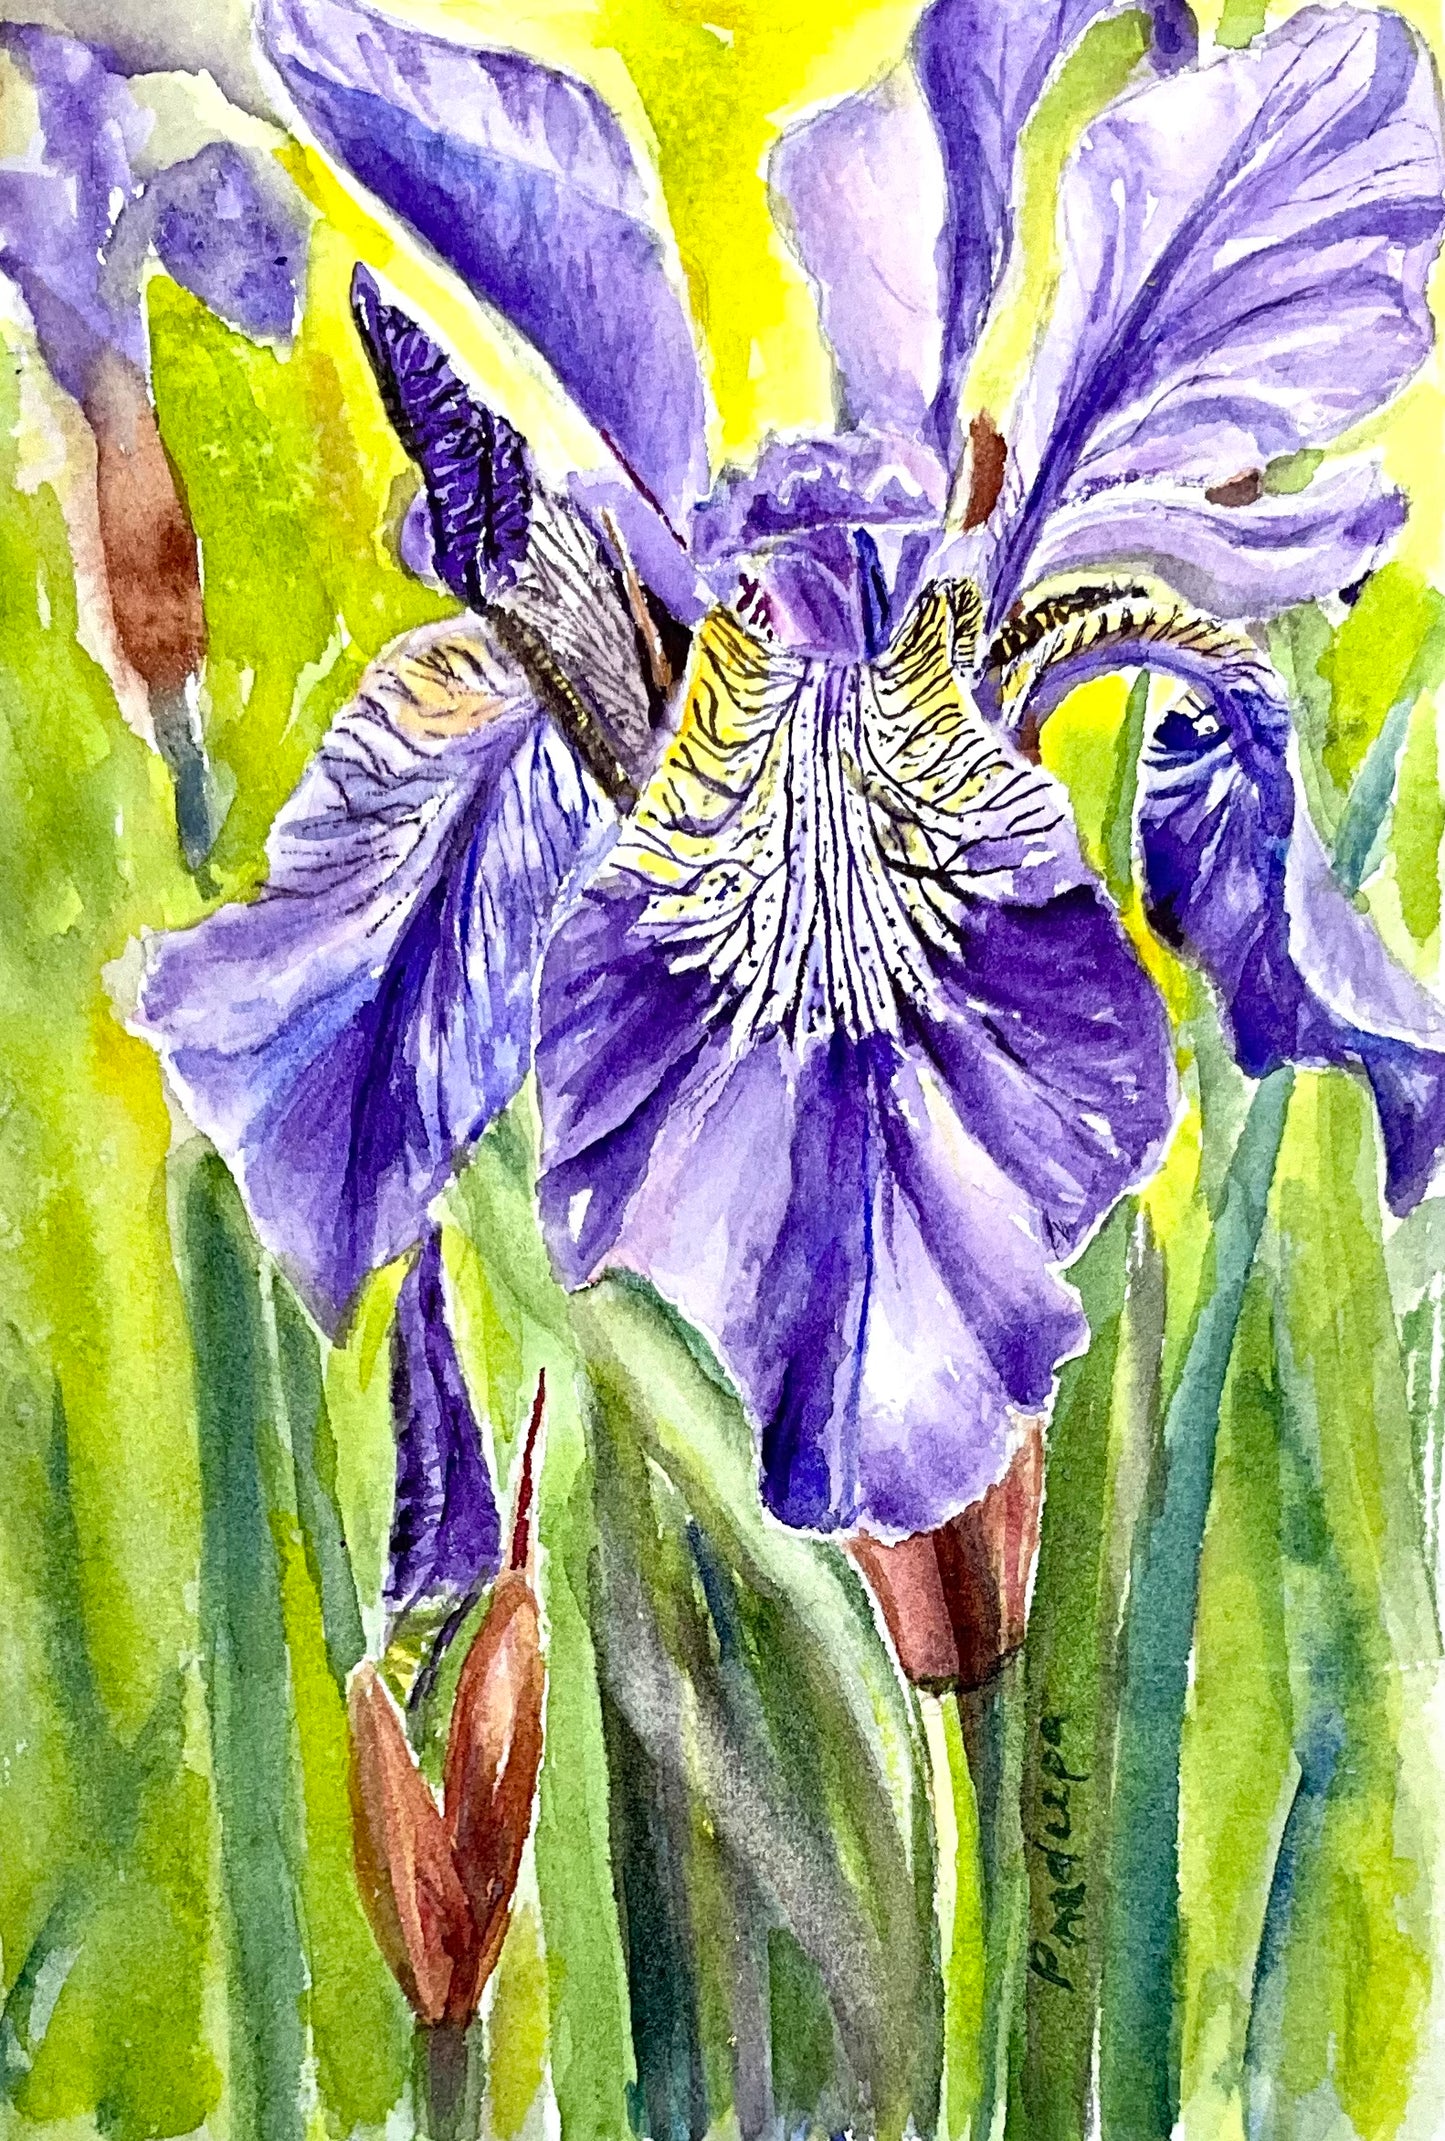 The Beauty of Iris - original watercolour painting